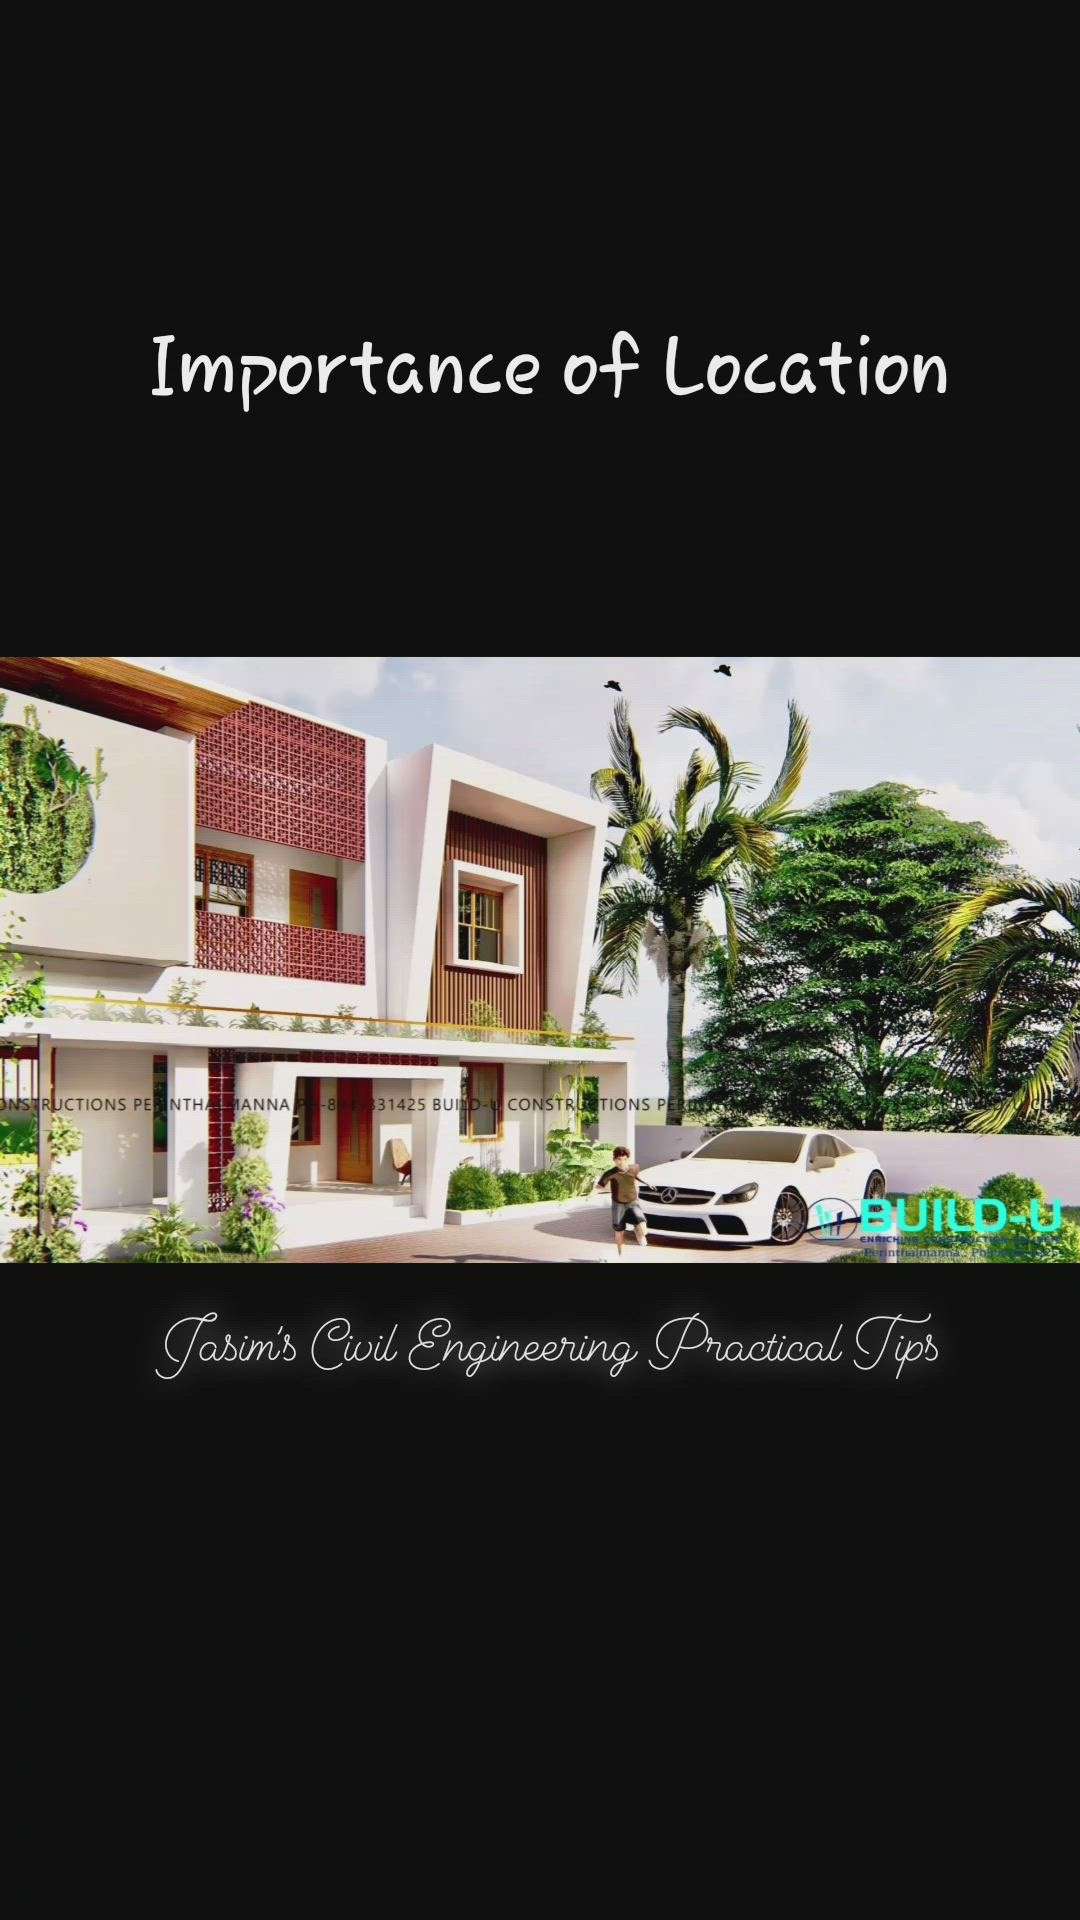 𝗡𝗲𝗮𝗿 𝘁𝗼 𝗖𝗼𝗺𝗽𝗹𝗲𝘁𝗶𝗼𝗻
Project at Karuvarakkundu Malappuram. 

𝐏𝐫𝐨𝐣𝐞𝐜𝐭 𝐃𝐞𝐭𝐚𝐢𝐥𝐬
Ground floor having a Plinth area of 1800sqft 
And First floor area with 1000sqft and an estimated total budget of 50 Lakhs. 

𝐀𝐫𝐜𝐡𝐢𝐭𝐞𝐜𝐭𝐮𝐫𝐚𝐥 𝐚𝐧𝐝 𝐂𝐨𝐧𝐬𝐮𝐥𝐭𝐢𝐧𝐠 𝐰𝐢𝐧𝐠
BUILD-U 
Malappuram ,Calicut
+91 9562014225
@builduconstruction


𝕾𝖙𝖗𝖚𝖈𝖙𝖚𝖗𝖆𝖑 𝕰𝖓𝖌𝖎𝖓𝖊𝖊𝖗
Er.Jasim Anamangadan
@jasimspm 

ℂ𝕝𝕚𝕖𝕟𝕥 
Mr.Yasir Arafath & Family 



🅻🅾🅲🅰🆃🅸🅾🅽
Karuvarakkundu in Malappuram Dist 

𝕯𝖊𝖘𝖎𝖌𝖓 𝕿𝖊𝖆𝖒
@sreehari_888
@muhammed___haq 
@ali__biker 
@nisha.narayanan.3576 
@jasimspm 
@builduconstruction 

#construction  #jasimstips #laterite #engineering #buildingmaterials #jasimscivilengineering 
#engineerjasim
#builduworkshop #buildutraining 
#വീട് #എൻ്റെവീട് #house_construction
#Jasims_Civil_Engineering_Tips